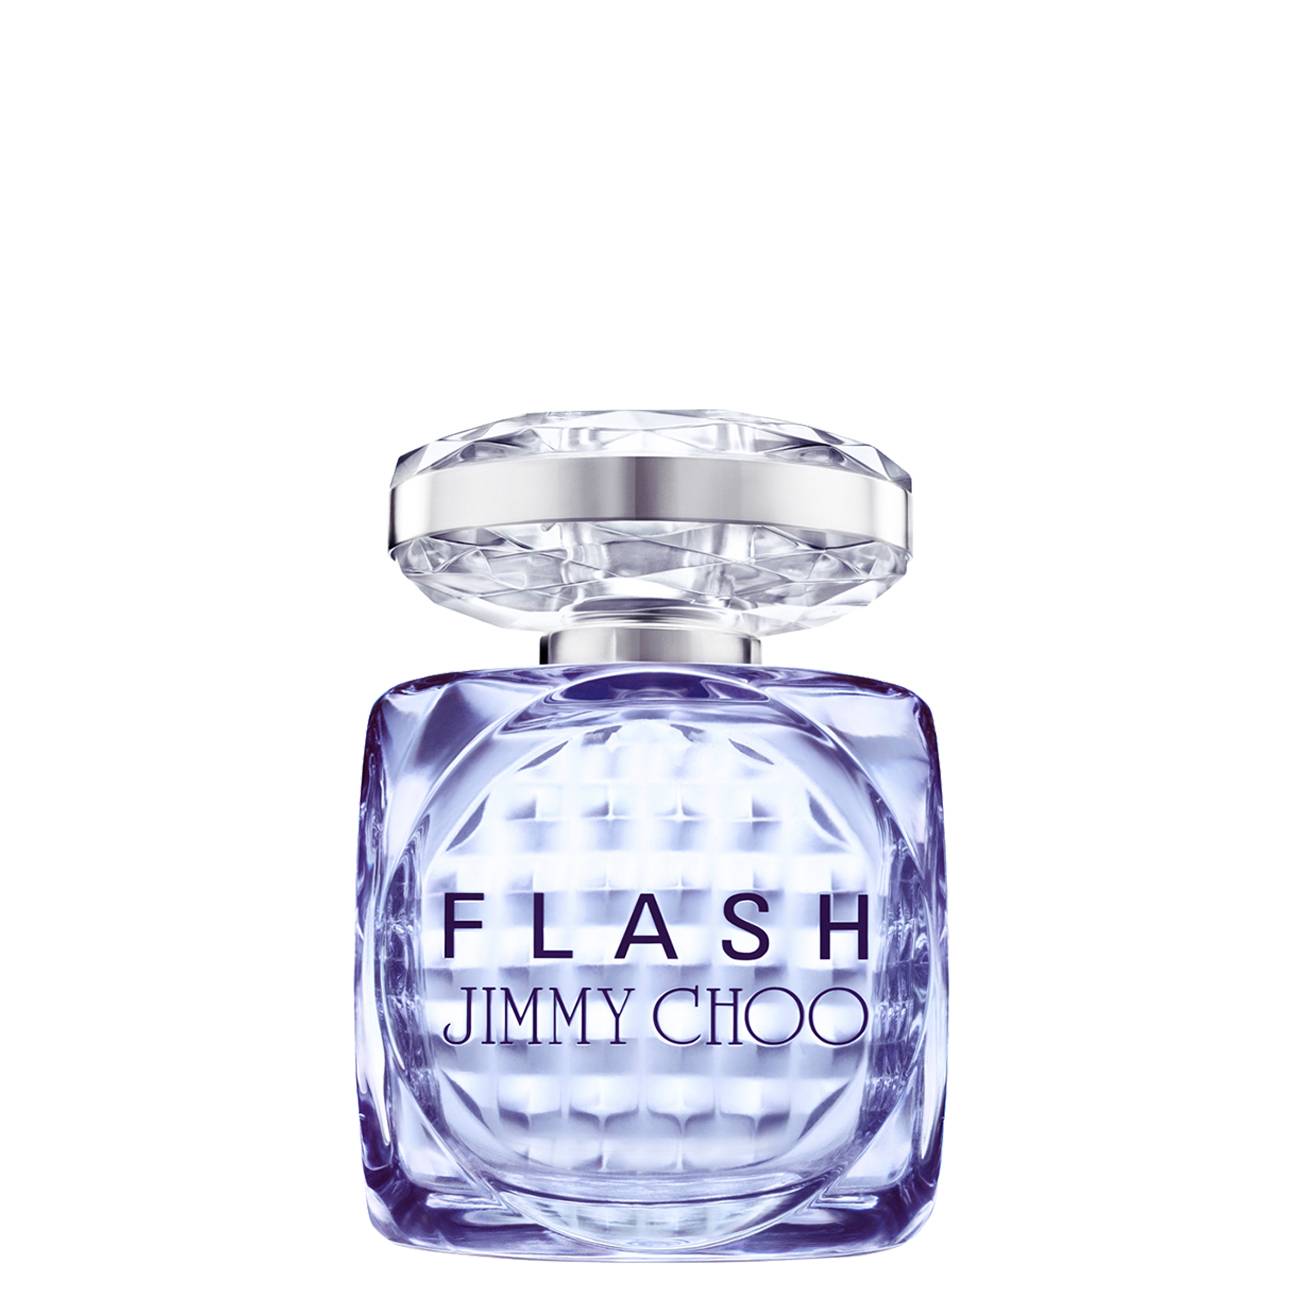 Apa de Parfum Jimmy Choo FLASH 60 ML 60ml cu comanda online